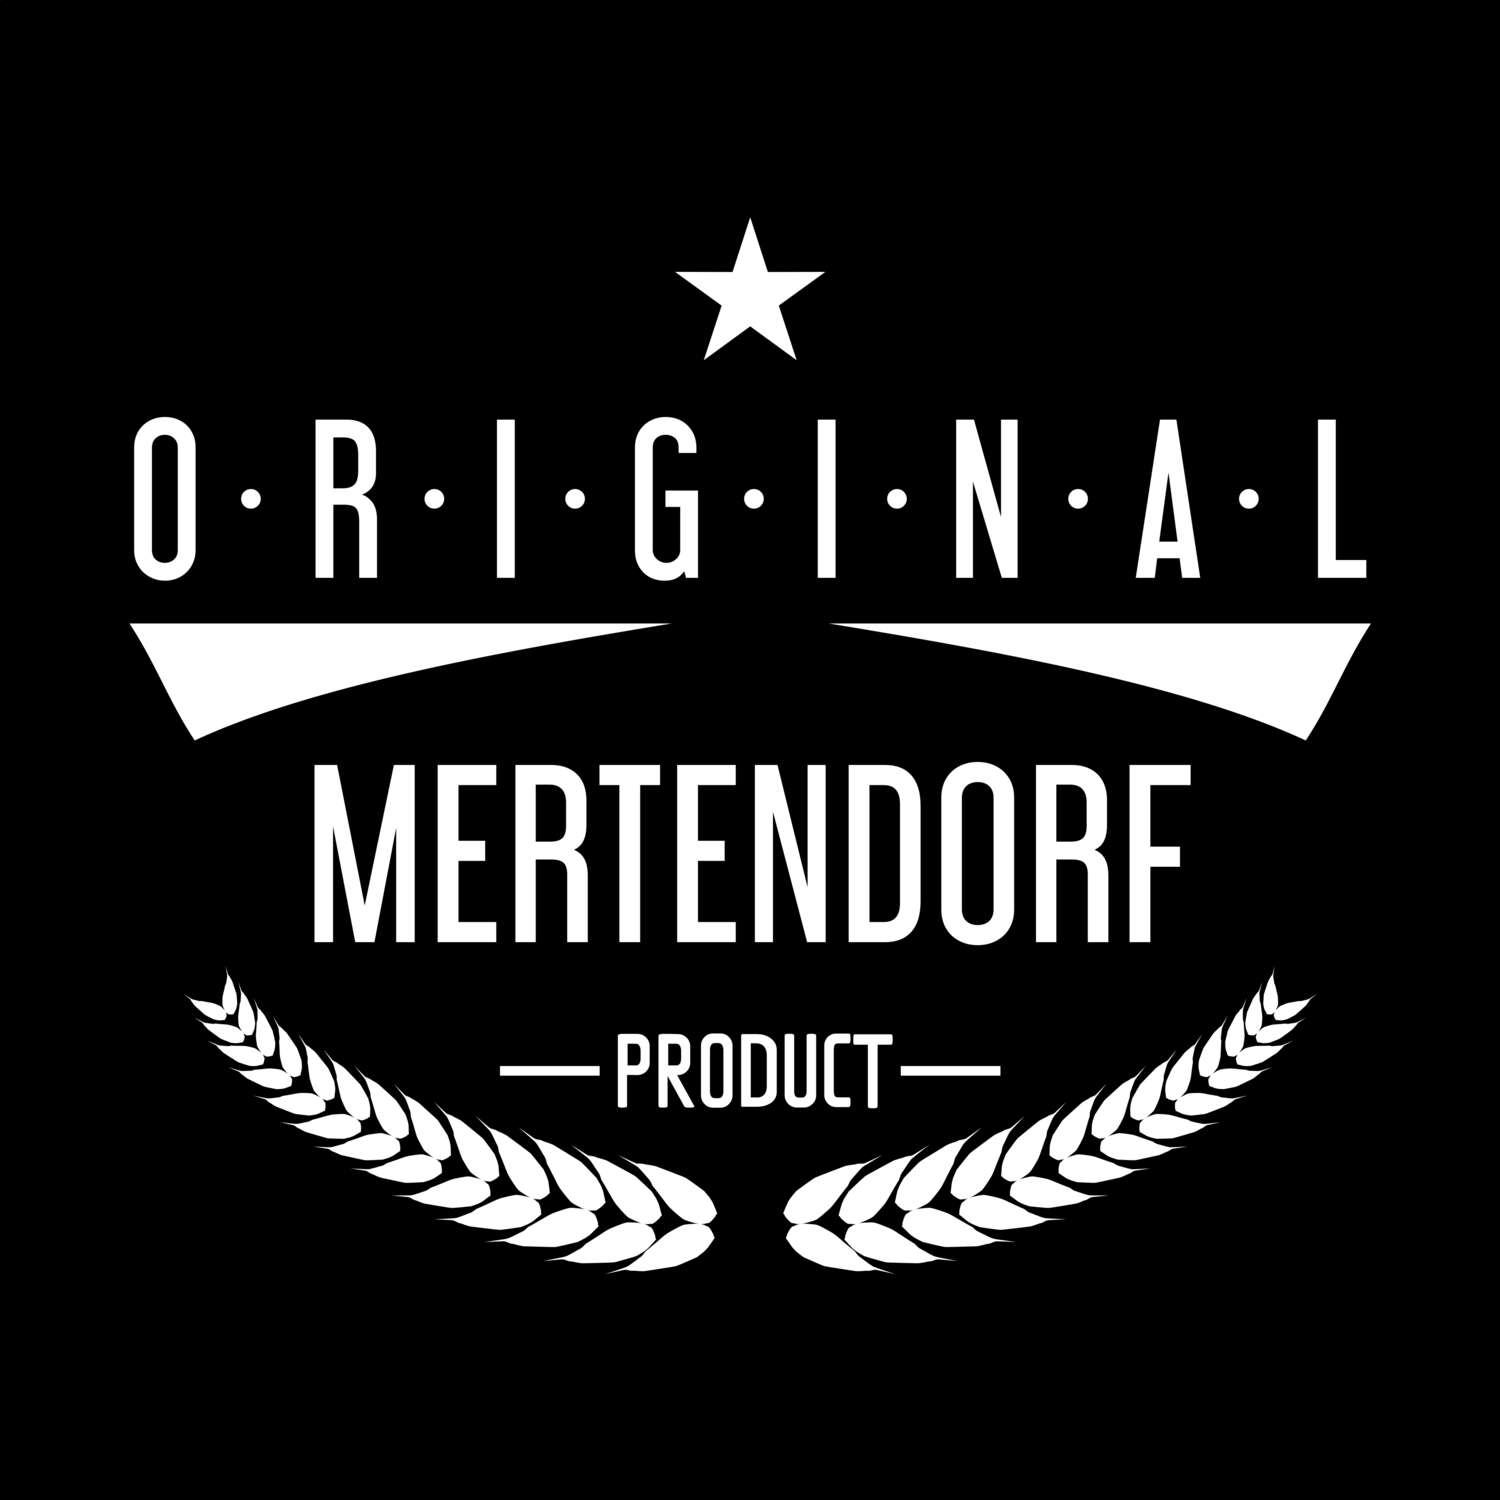 Mertendorf T-Shirt »Original Product«